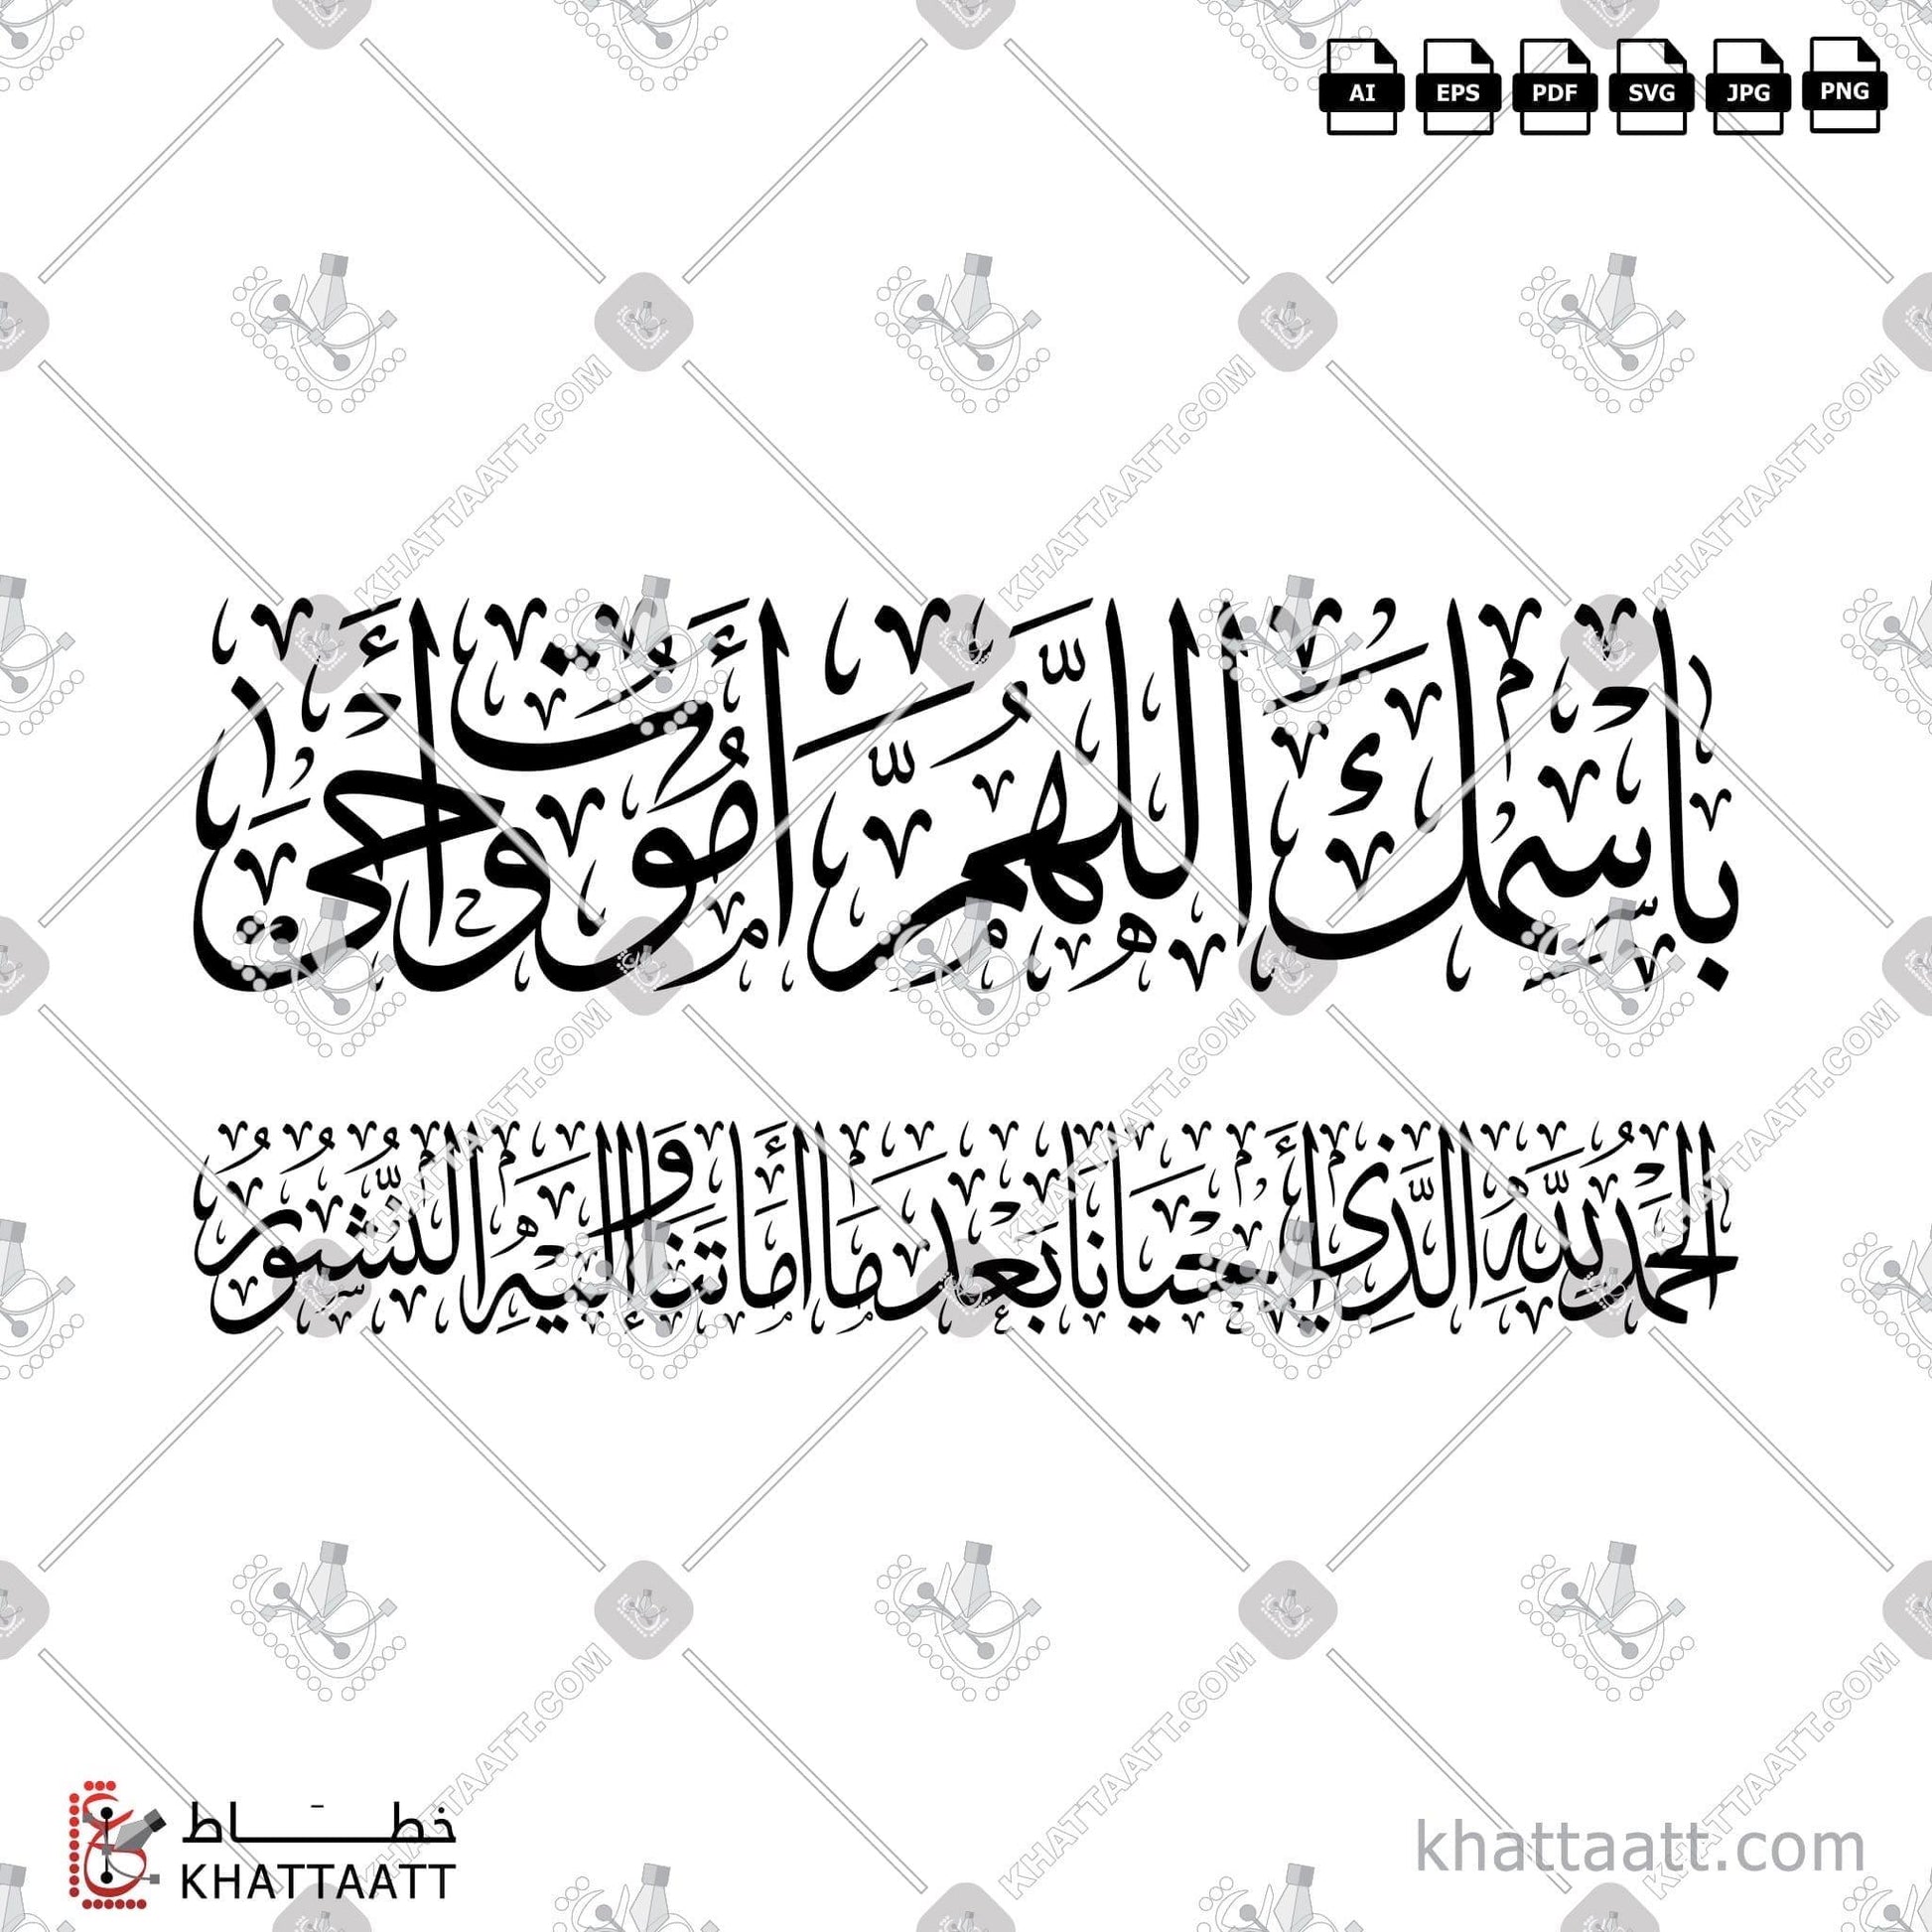 Download Arabic Calligraphy of باسمك اللهم أموت وأحيا، الحمد لله الذي أحيانا بعد ما أماتنا وإليه النشور in Thuluth - خط الثلث in vector and .png